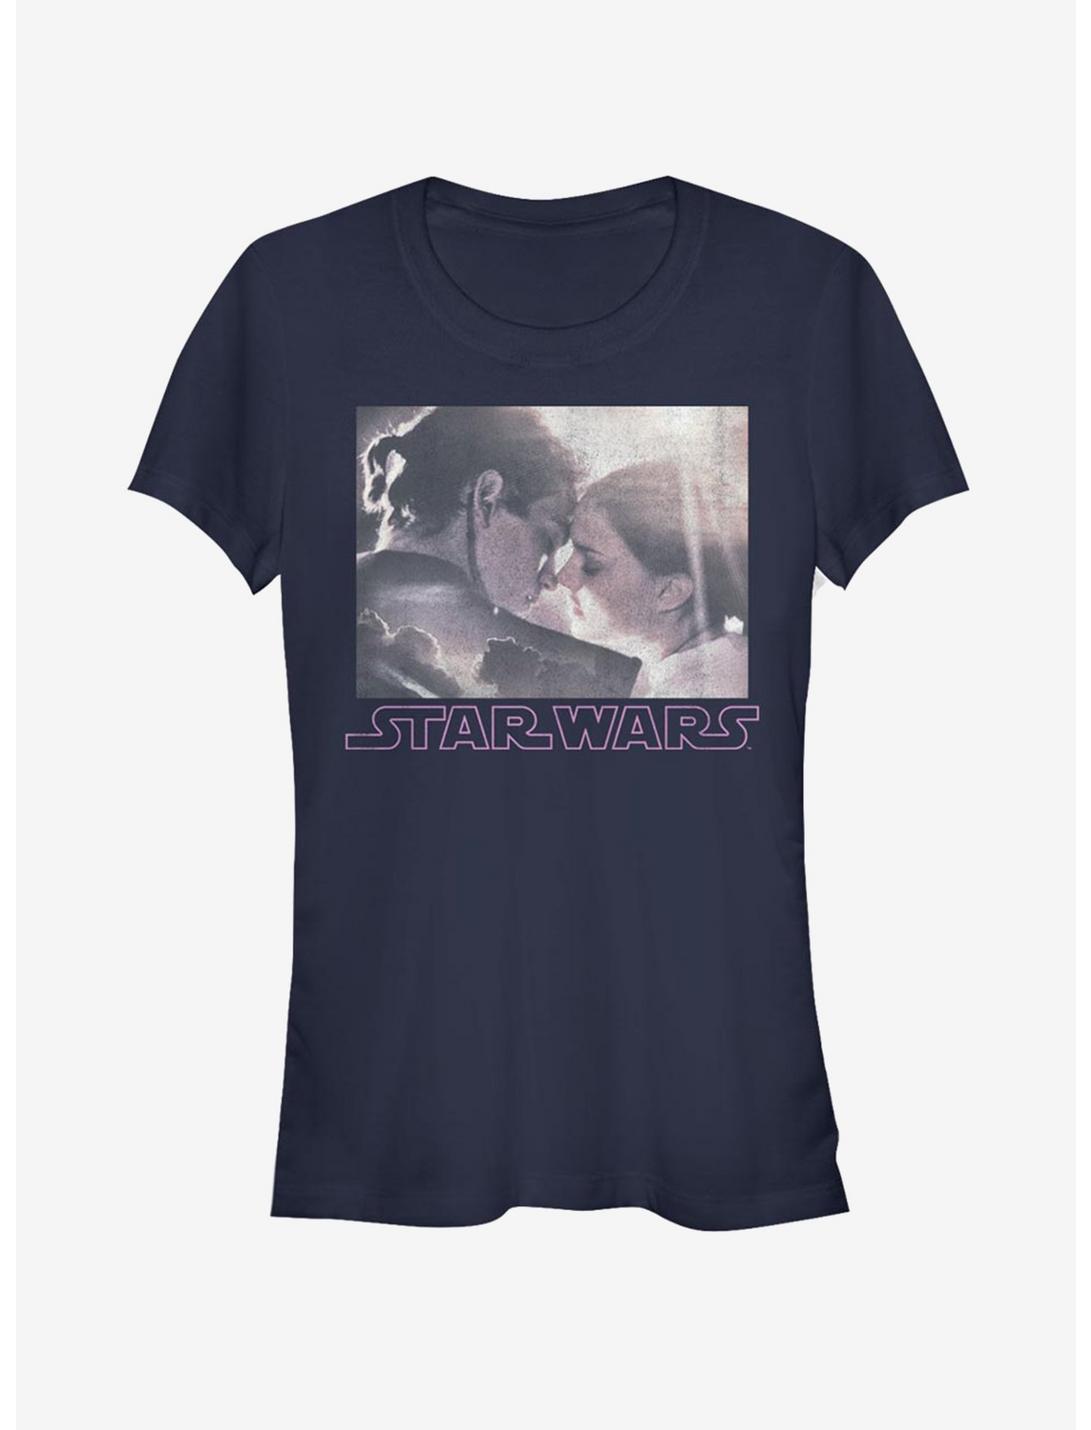 Star Wars Vintage Photo Girls T-Shirt, NAVY, hi-res